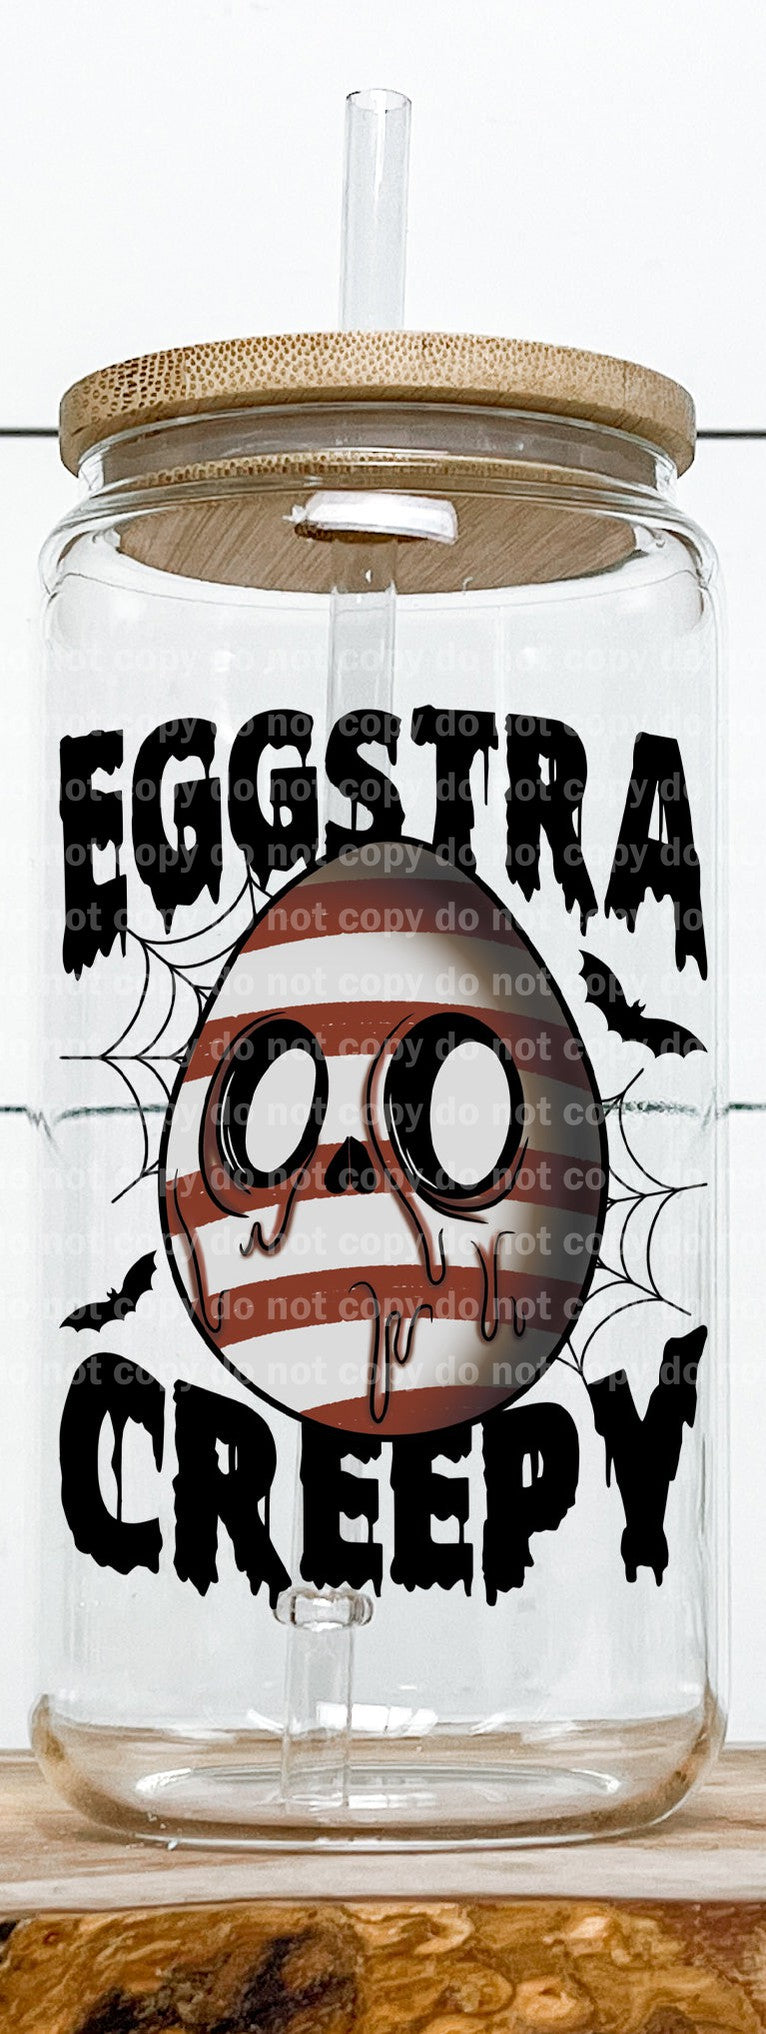 Eggstra Creepy